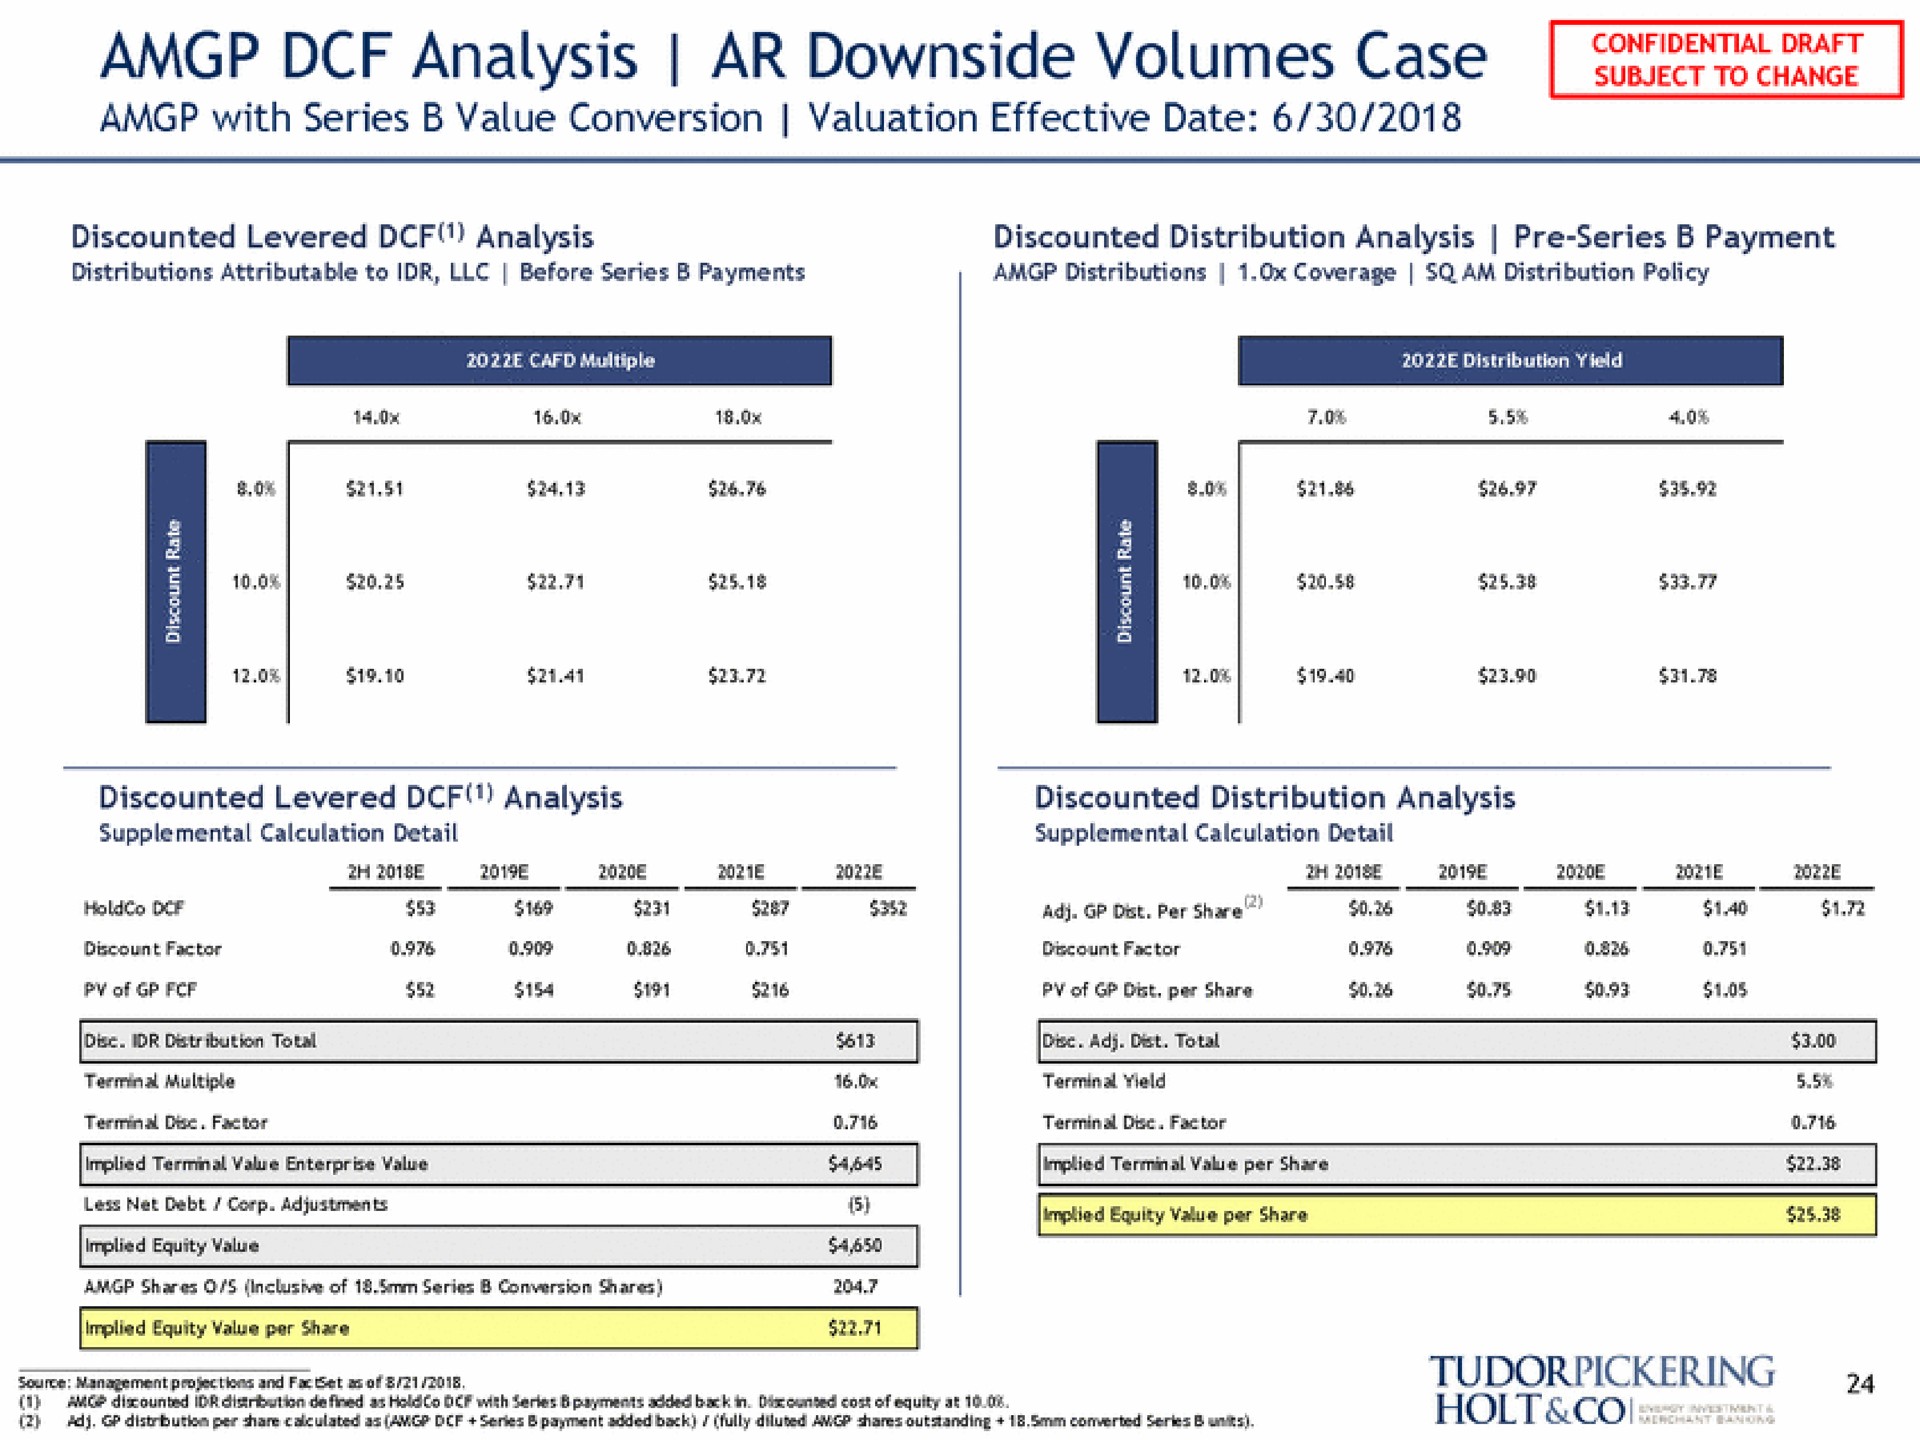 analysis downside volumes case tora a | Tudor, Pickering, Holt & Co